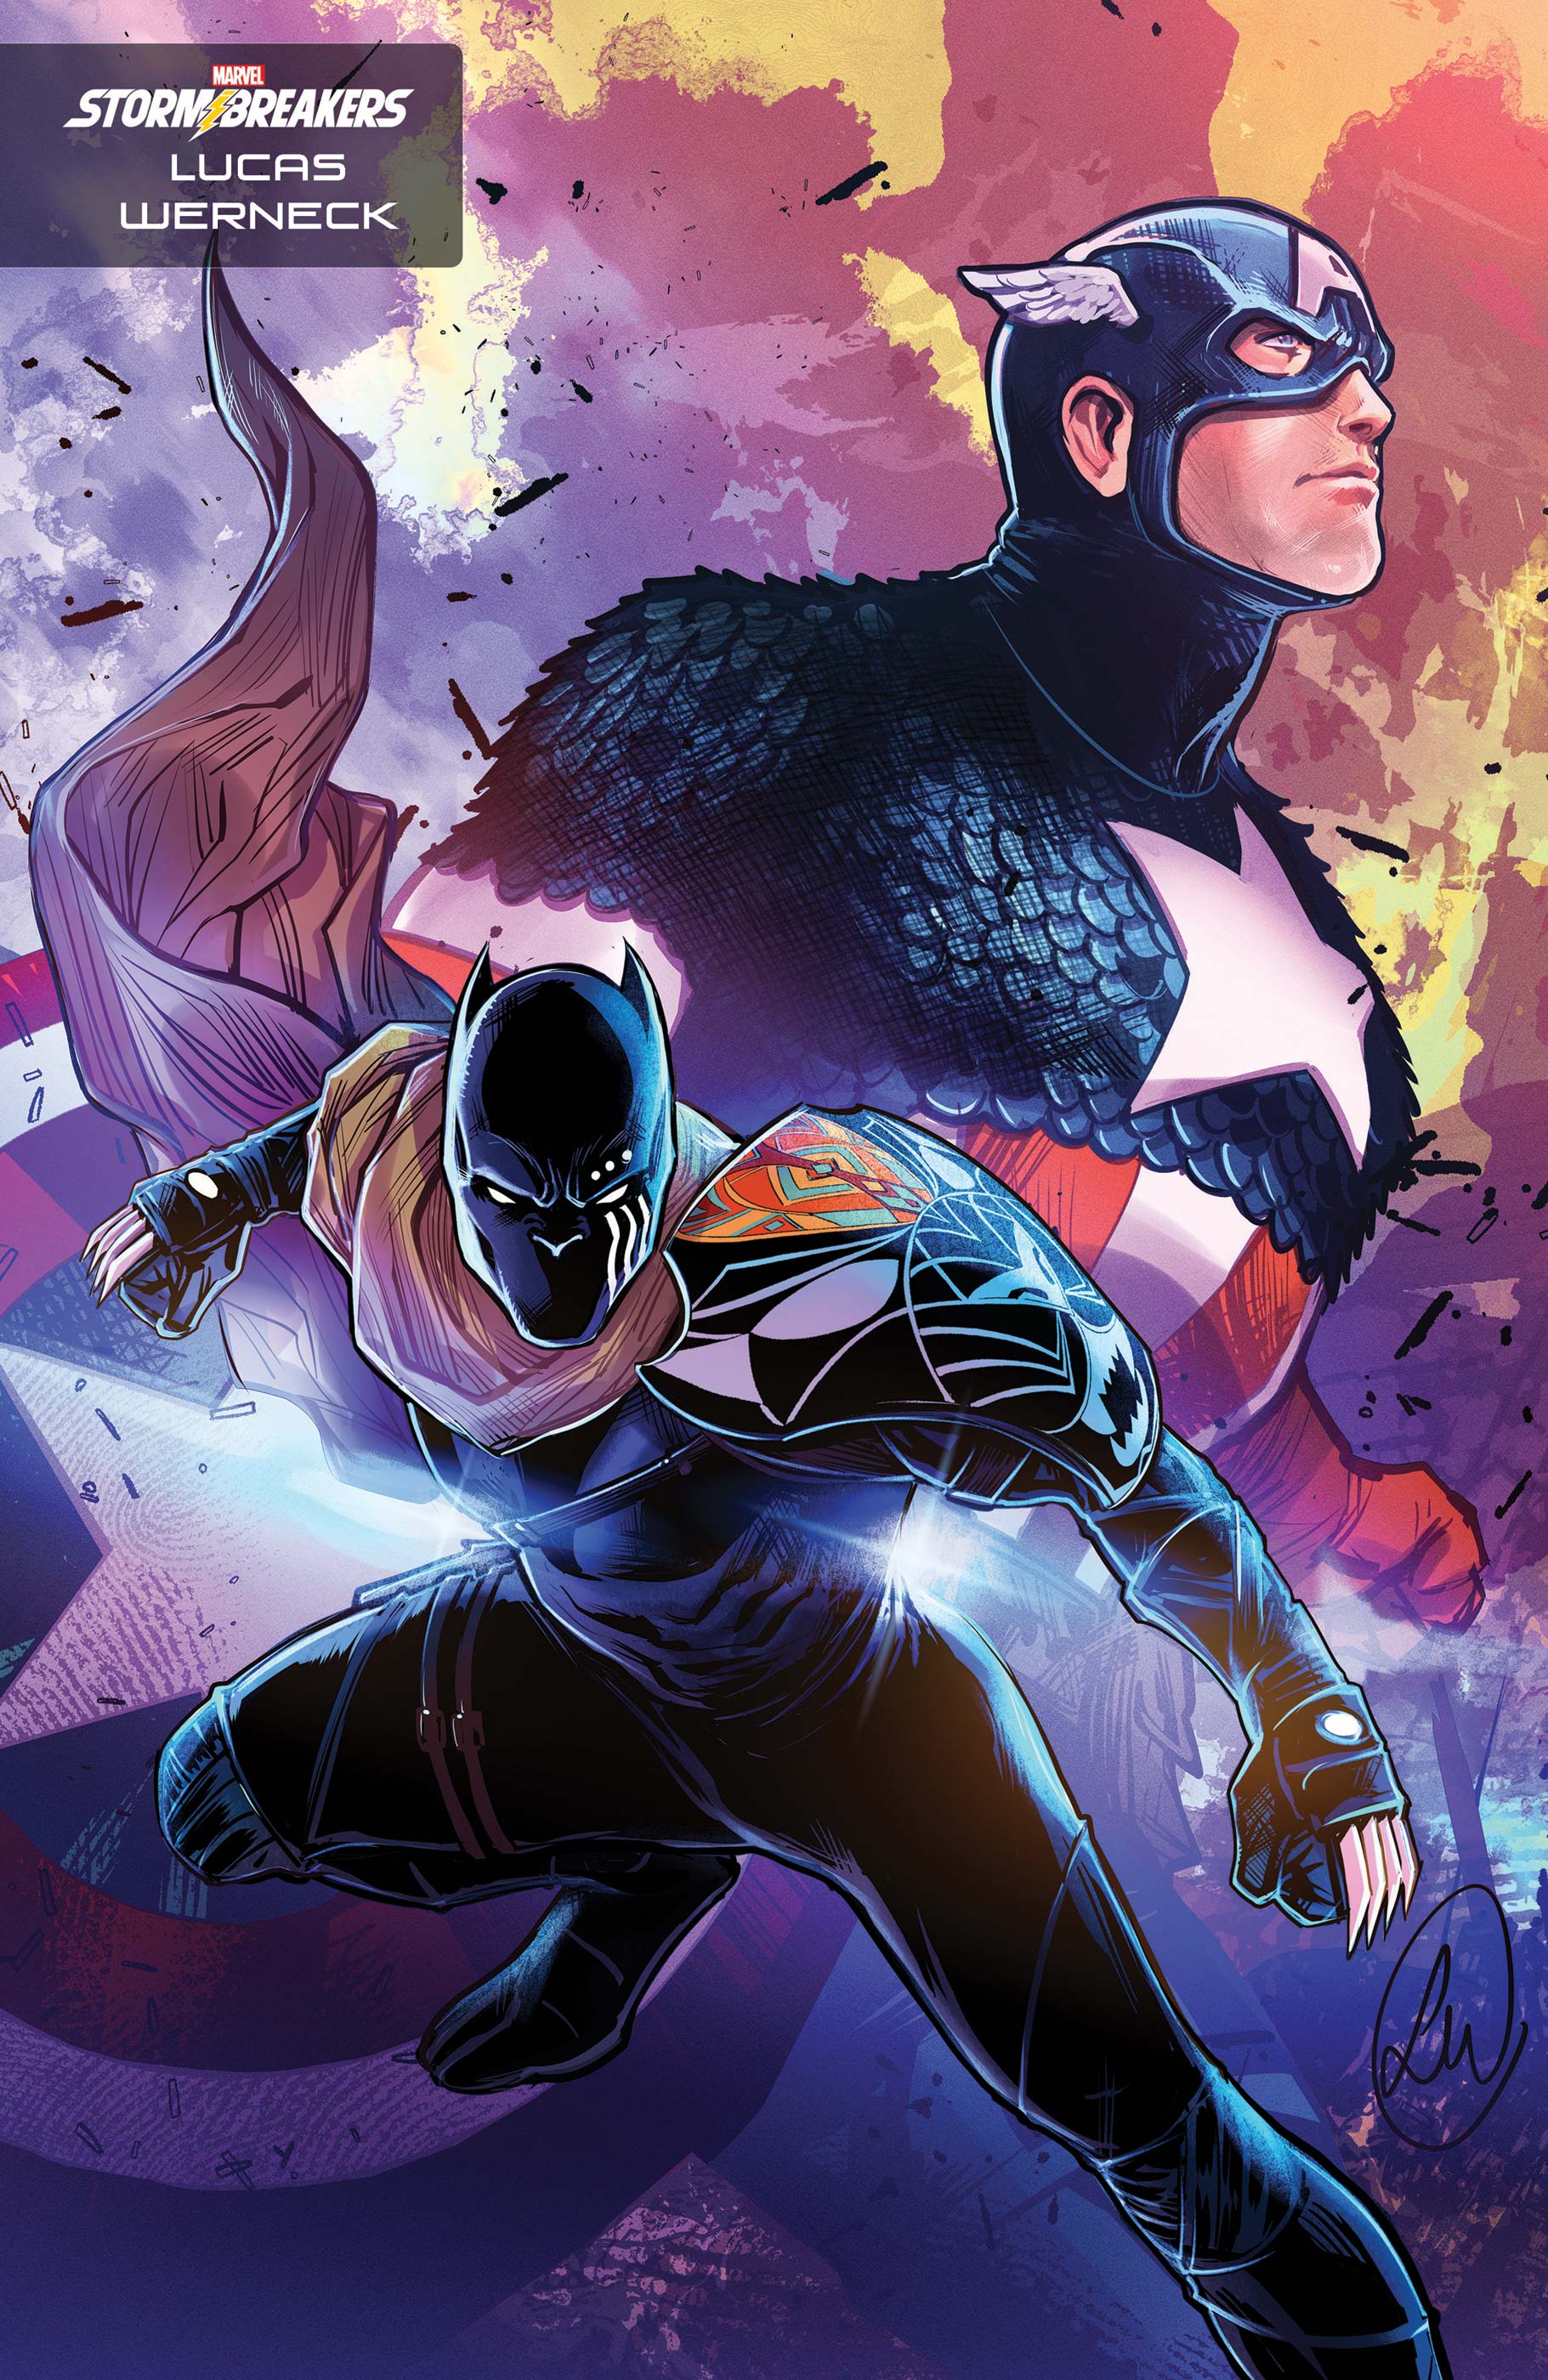 Black Panther (2023) #4 (Variant)